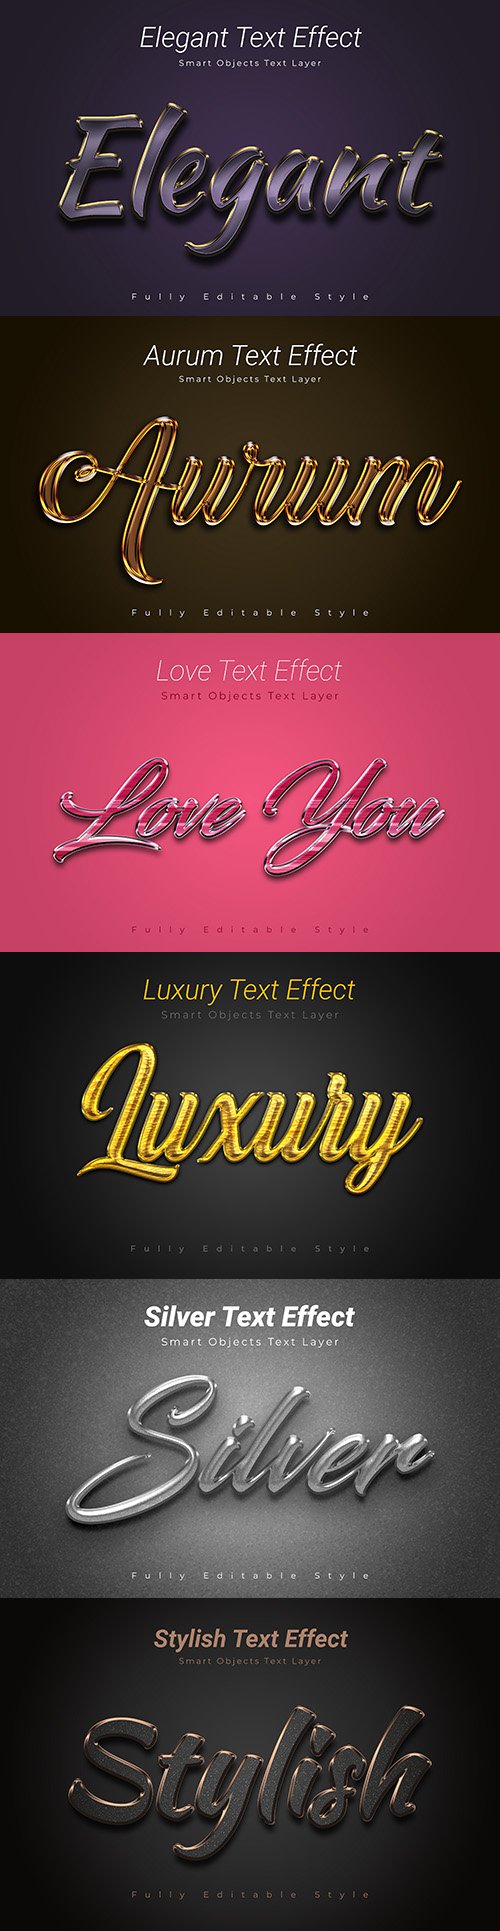 Editable elegant text effect styles Premium PSD